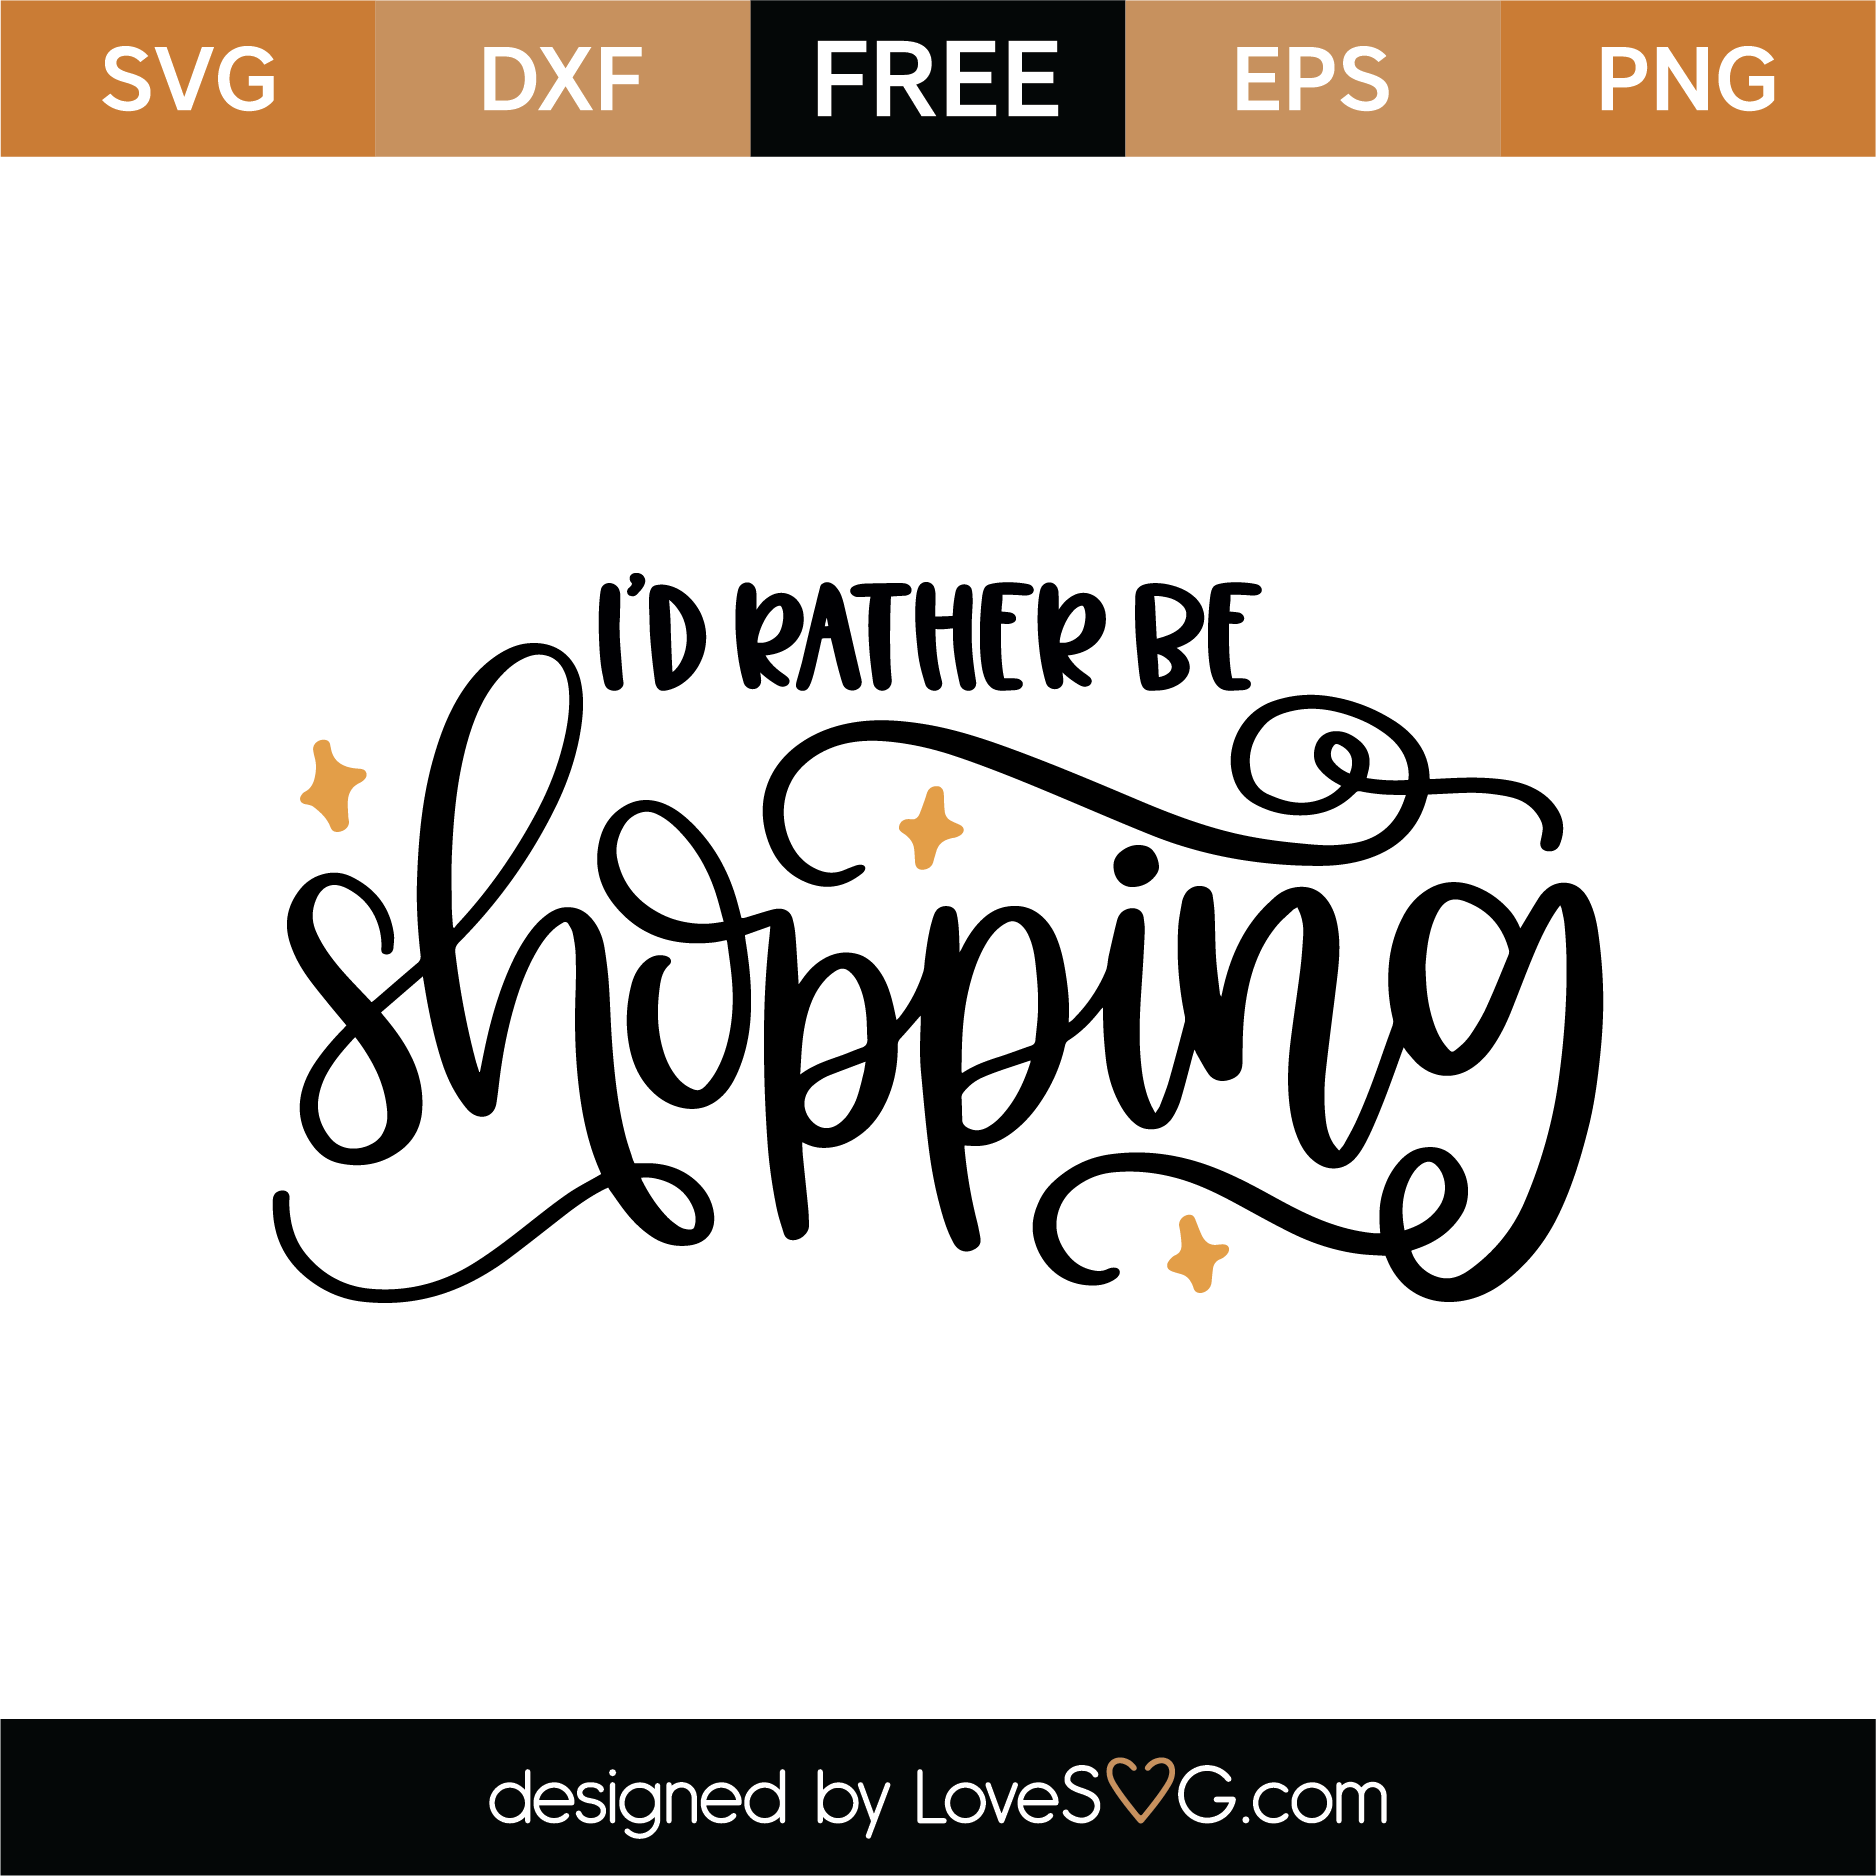 Download Free I'd Rather Be Shopping SVG Cut File | Lovesvg.com